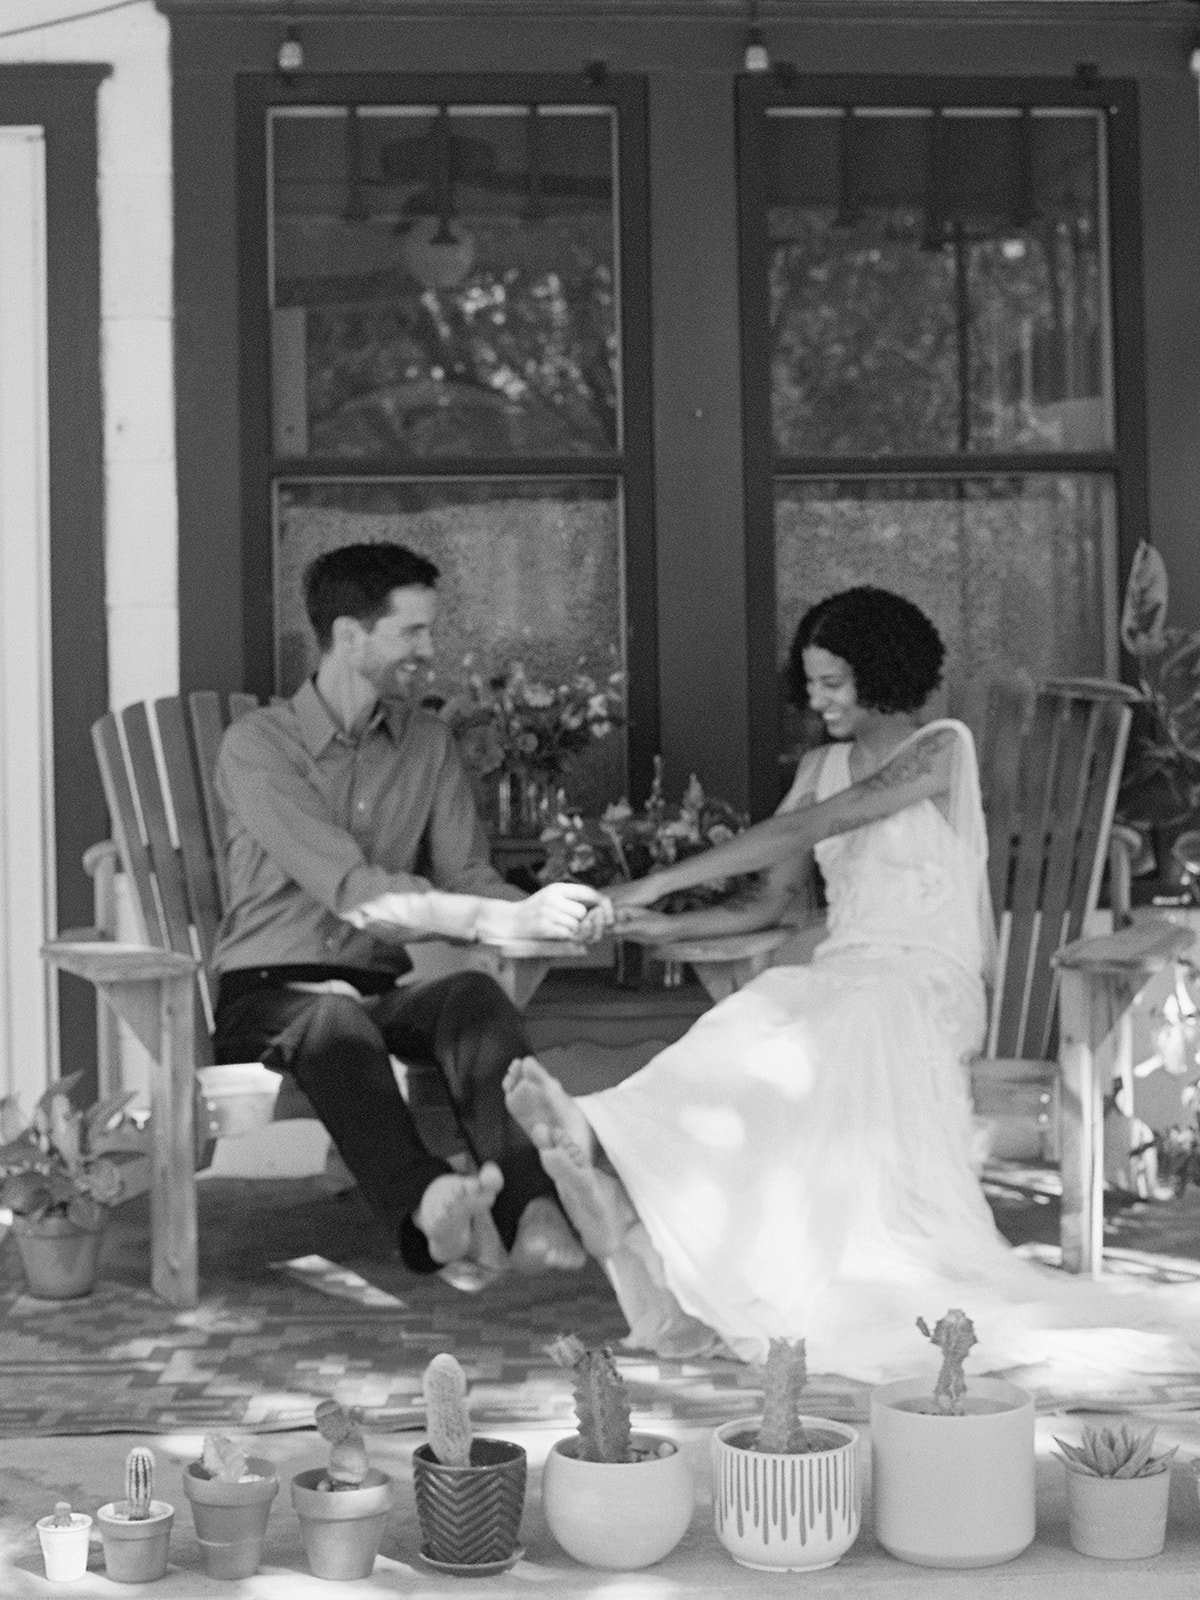 Best-Austin-Wedding-Photographers-Elopement-Film-35mm-Asheville-Santa-Barbara-34.jpg